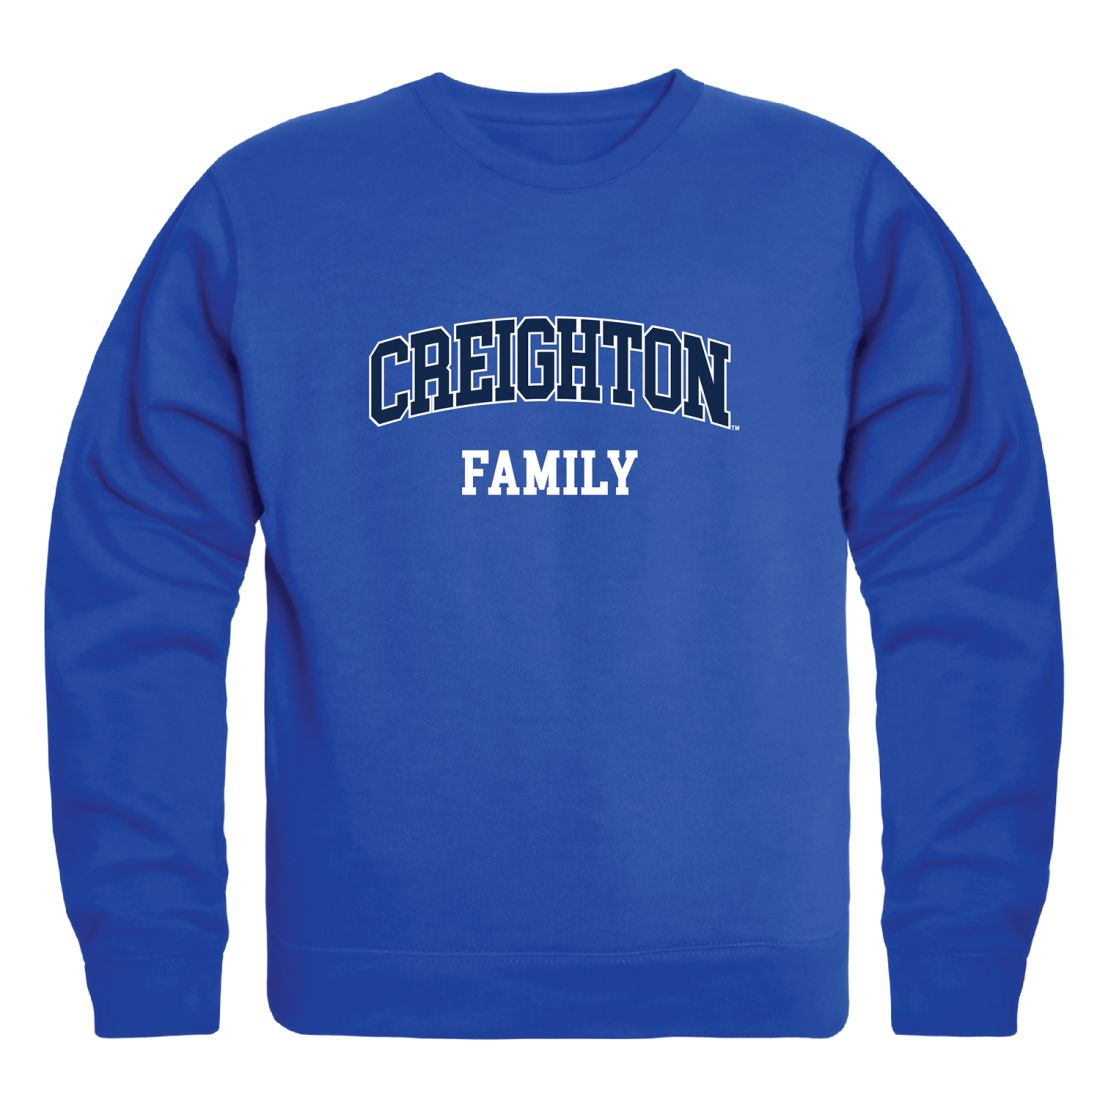 Creighton-University-Bluejays-Family-Fleece-Crewneck-Pullover-Sweatshirt